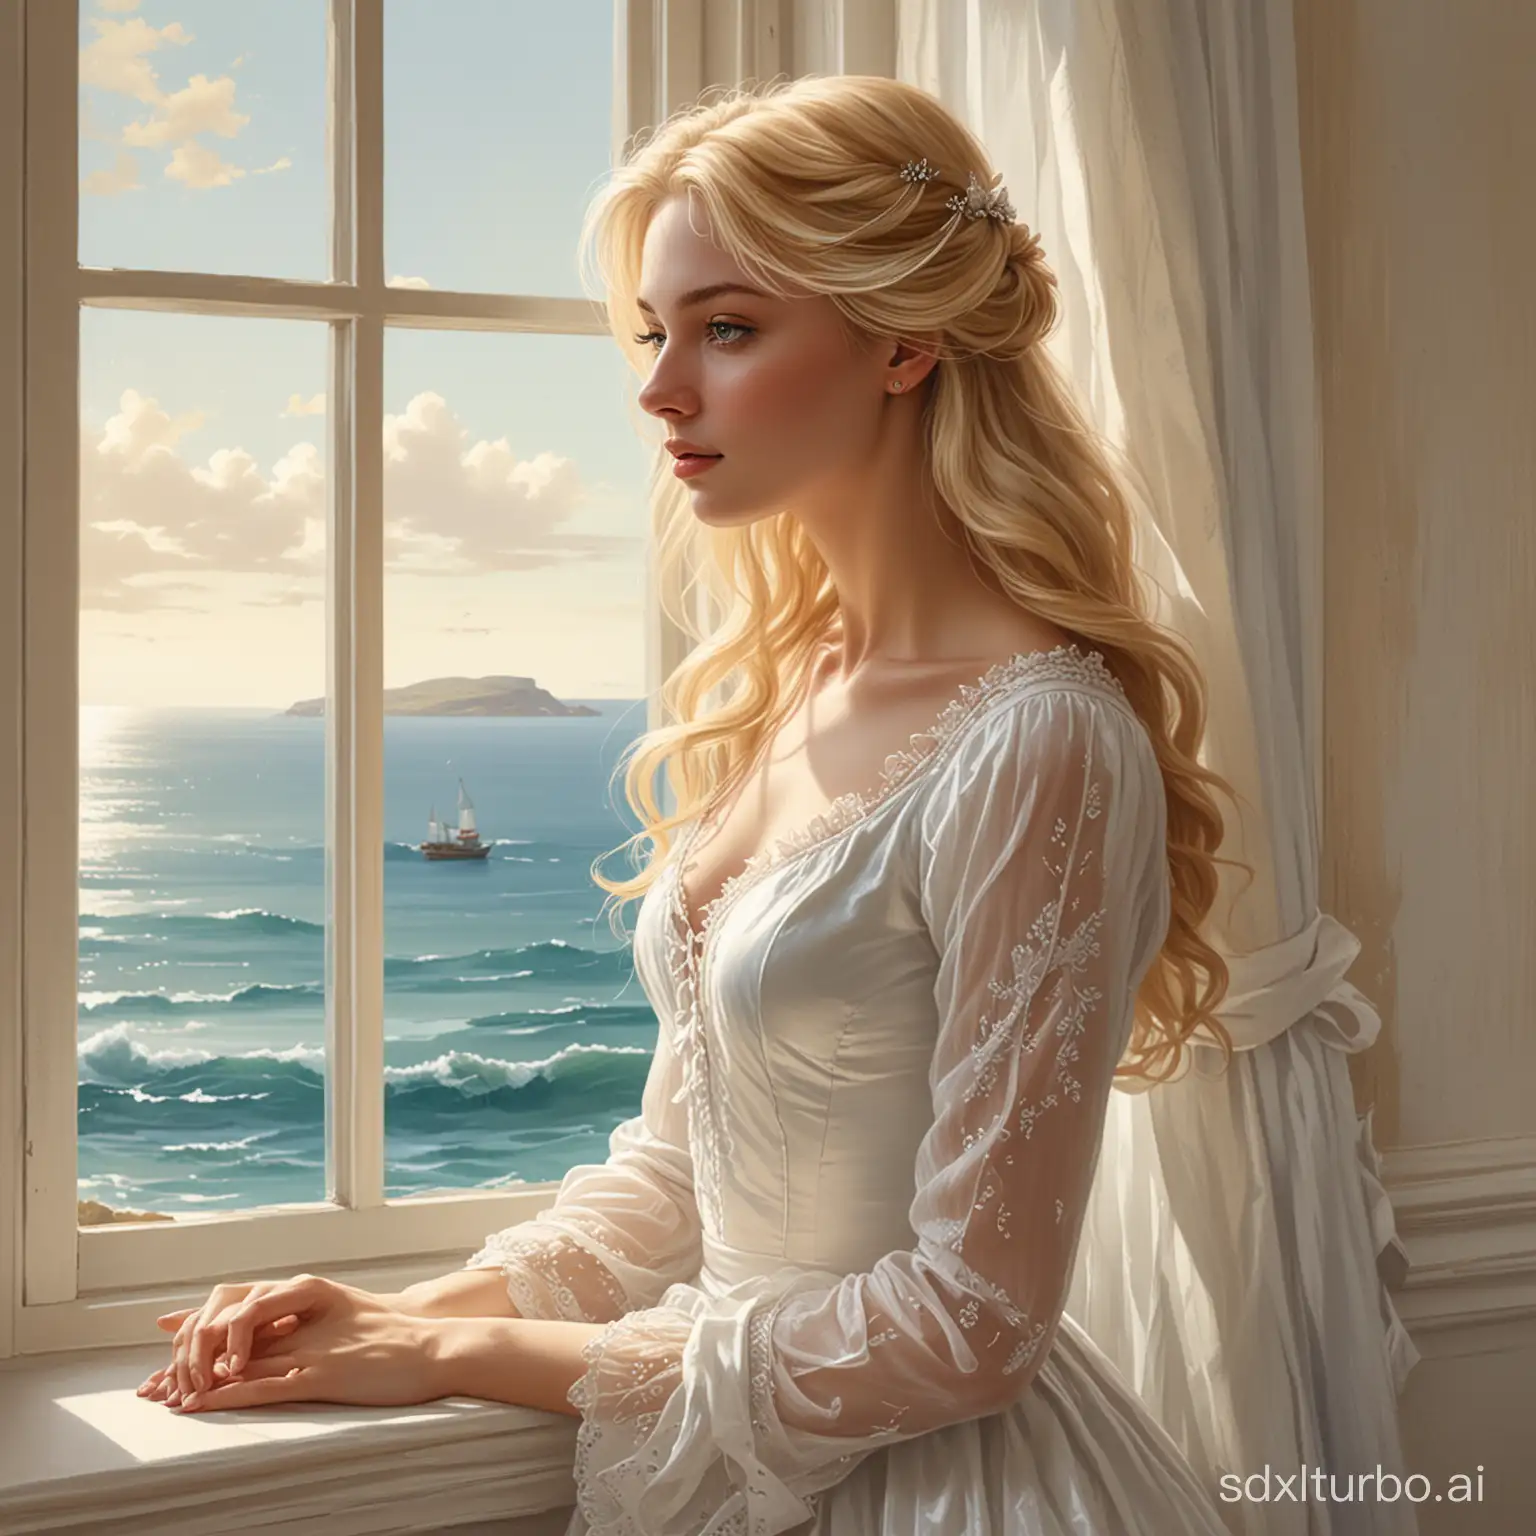 Elegant-Blonde-Woman-by-the-Sea-Enchanting-Fairy-Tale-Illustration